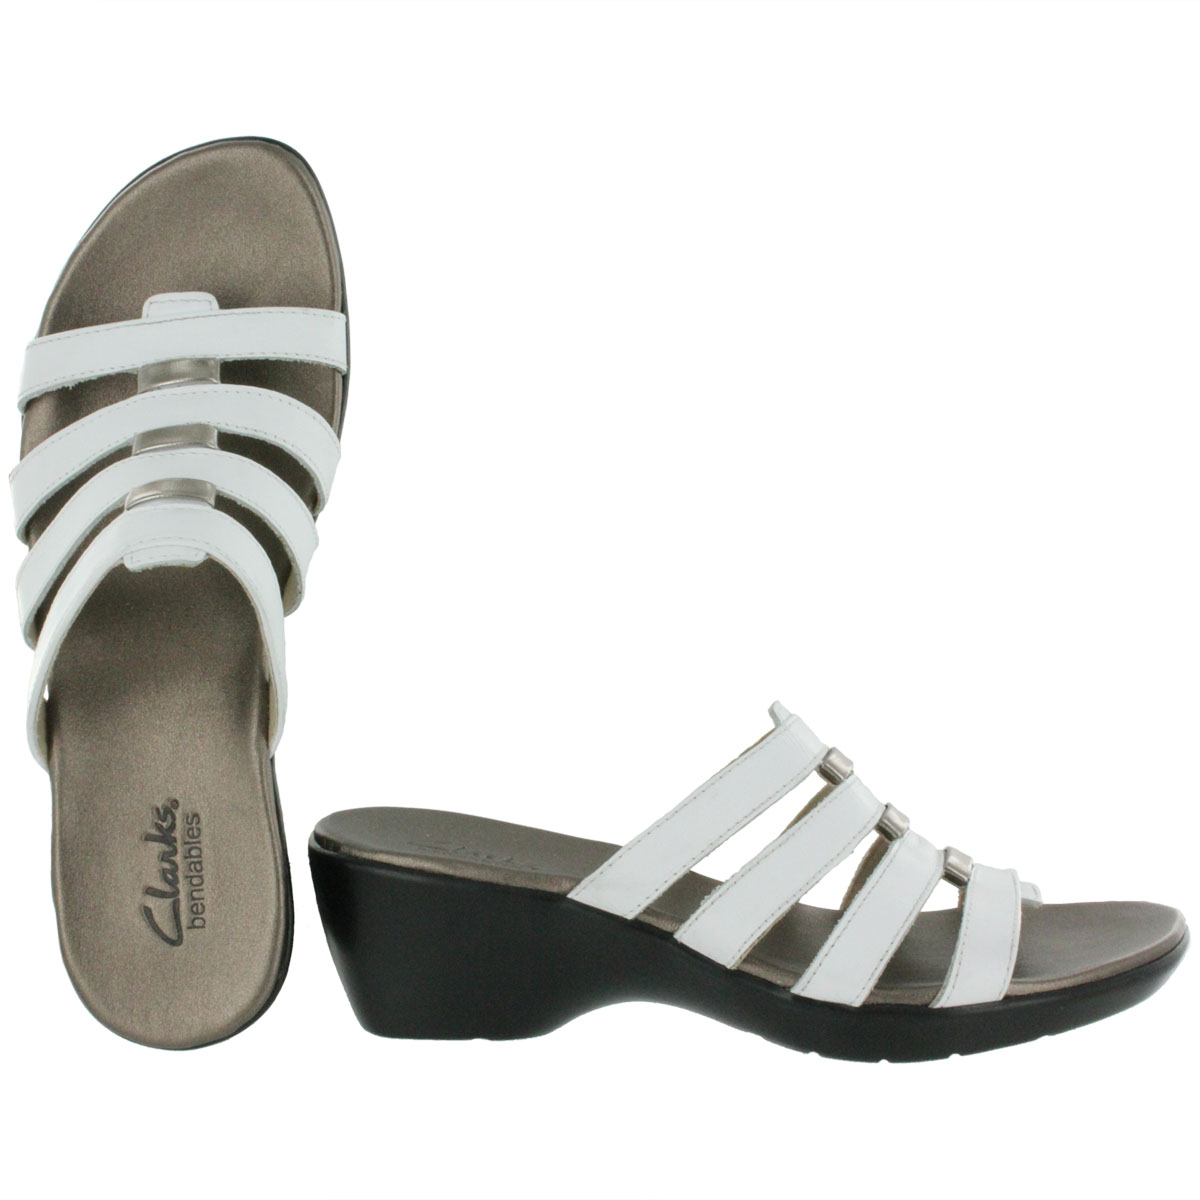 Aerosole Sandals: Clarks Sandals For Women Clearance